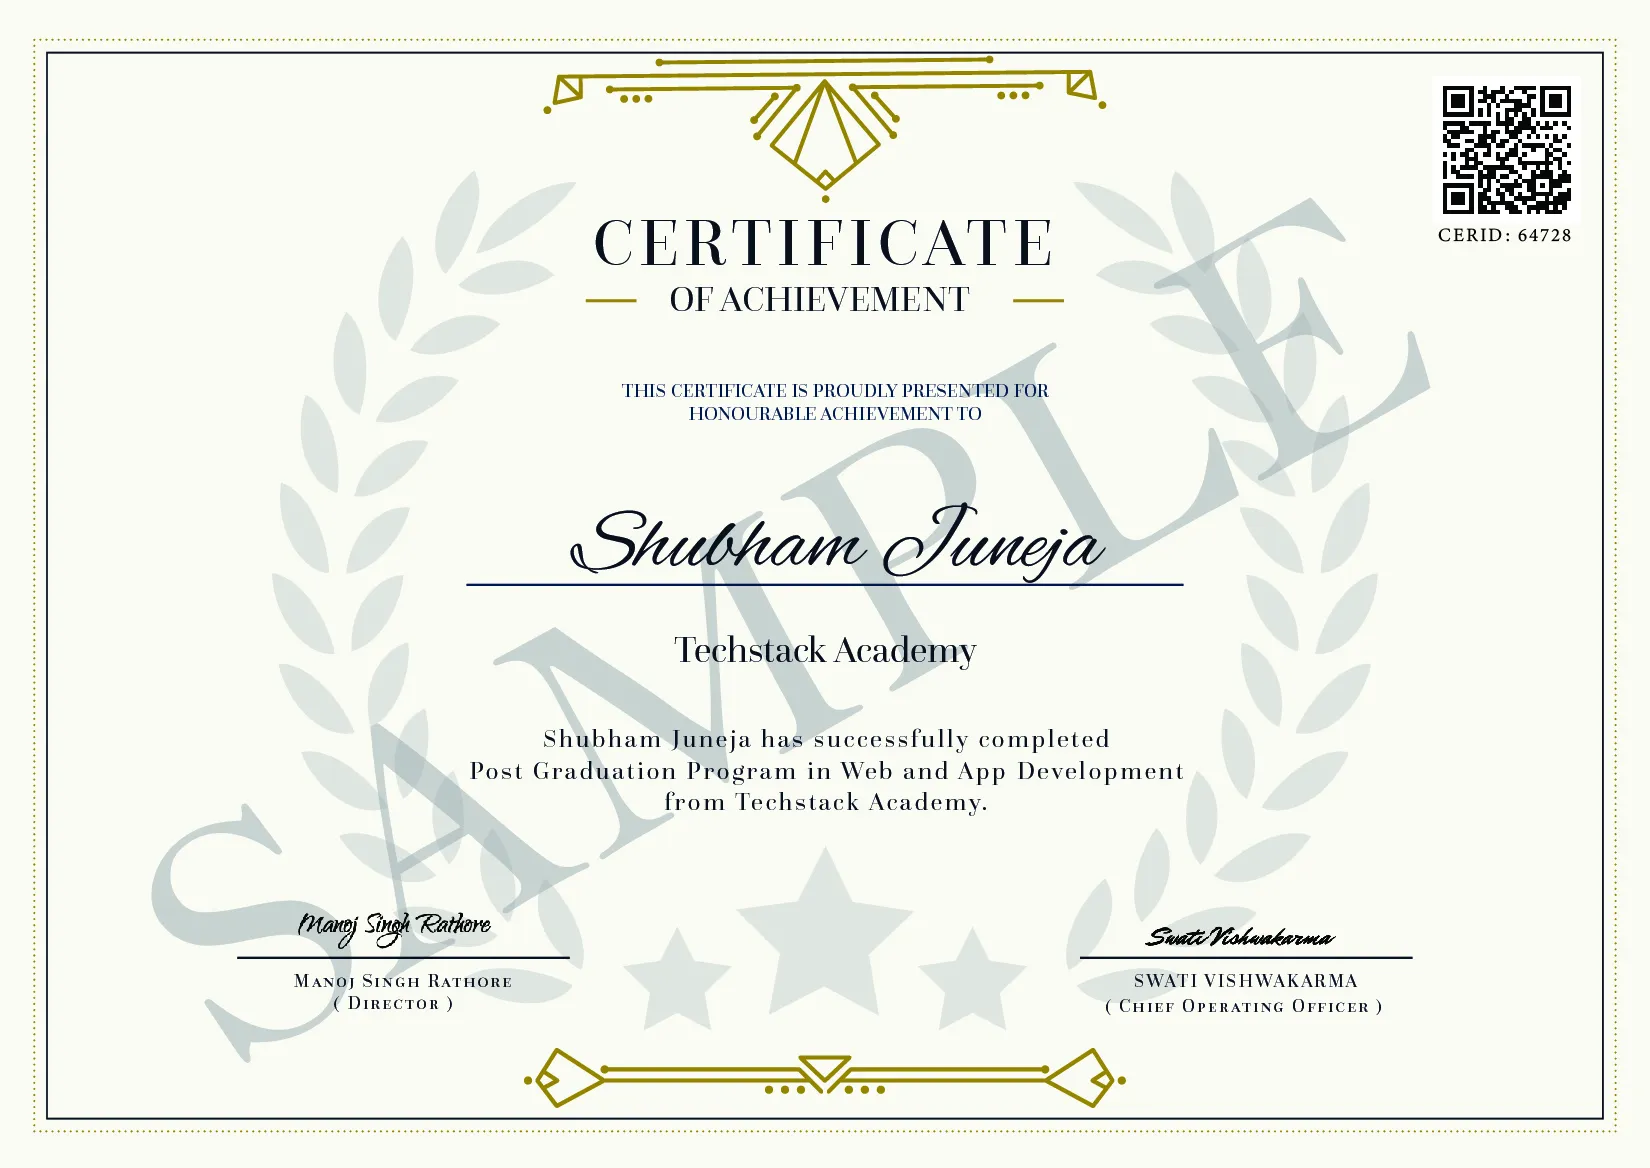 Post Graduation Program in Web and App Development Course Certificate